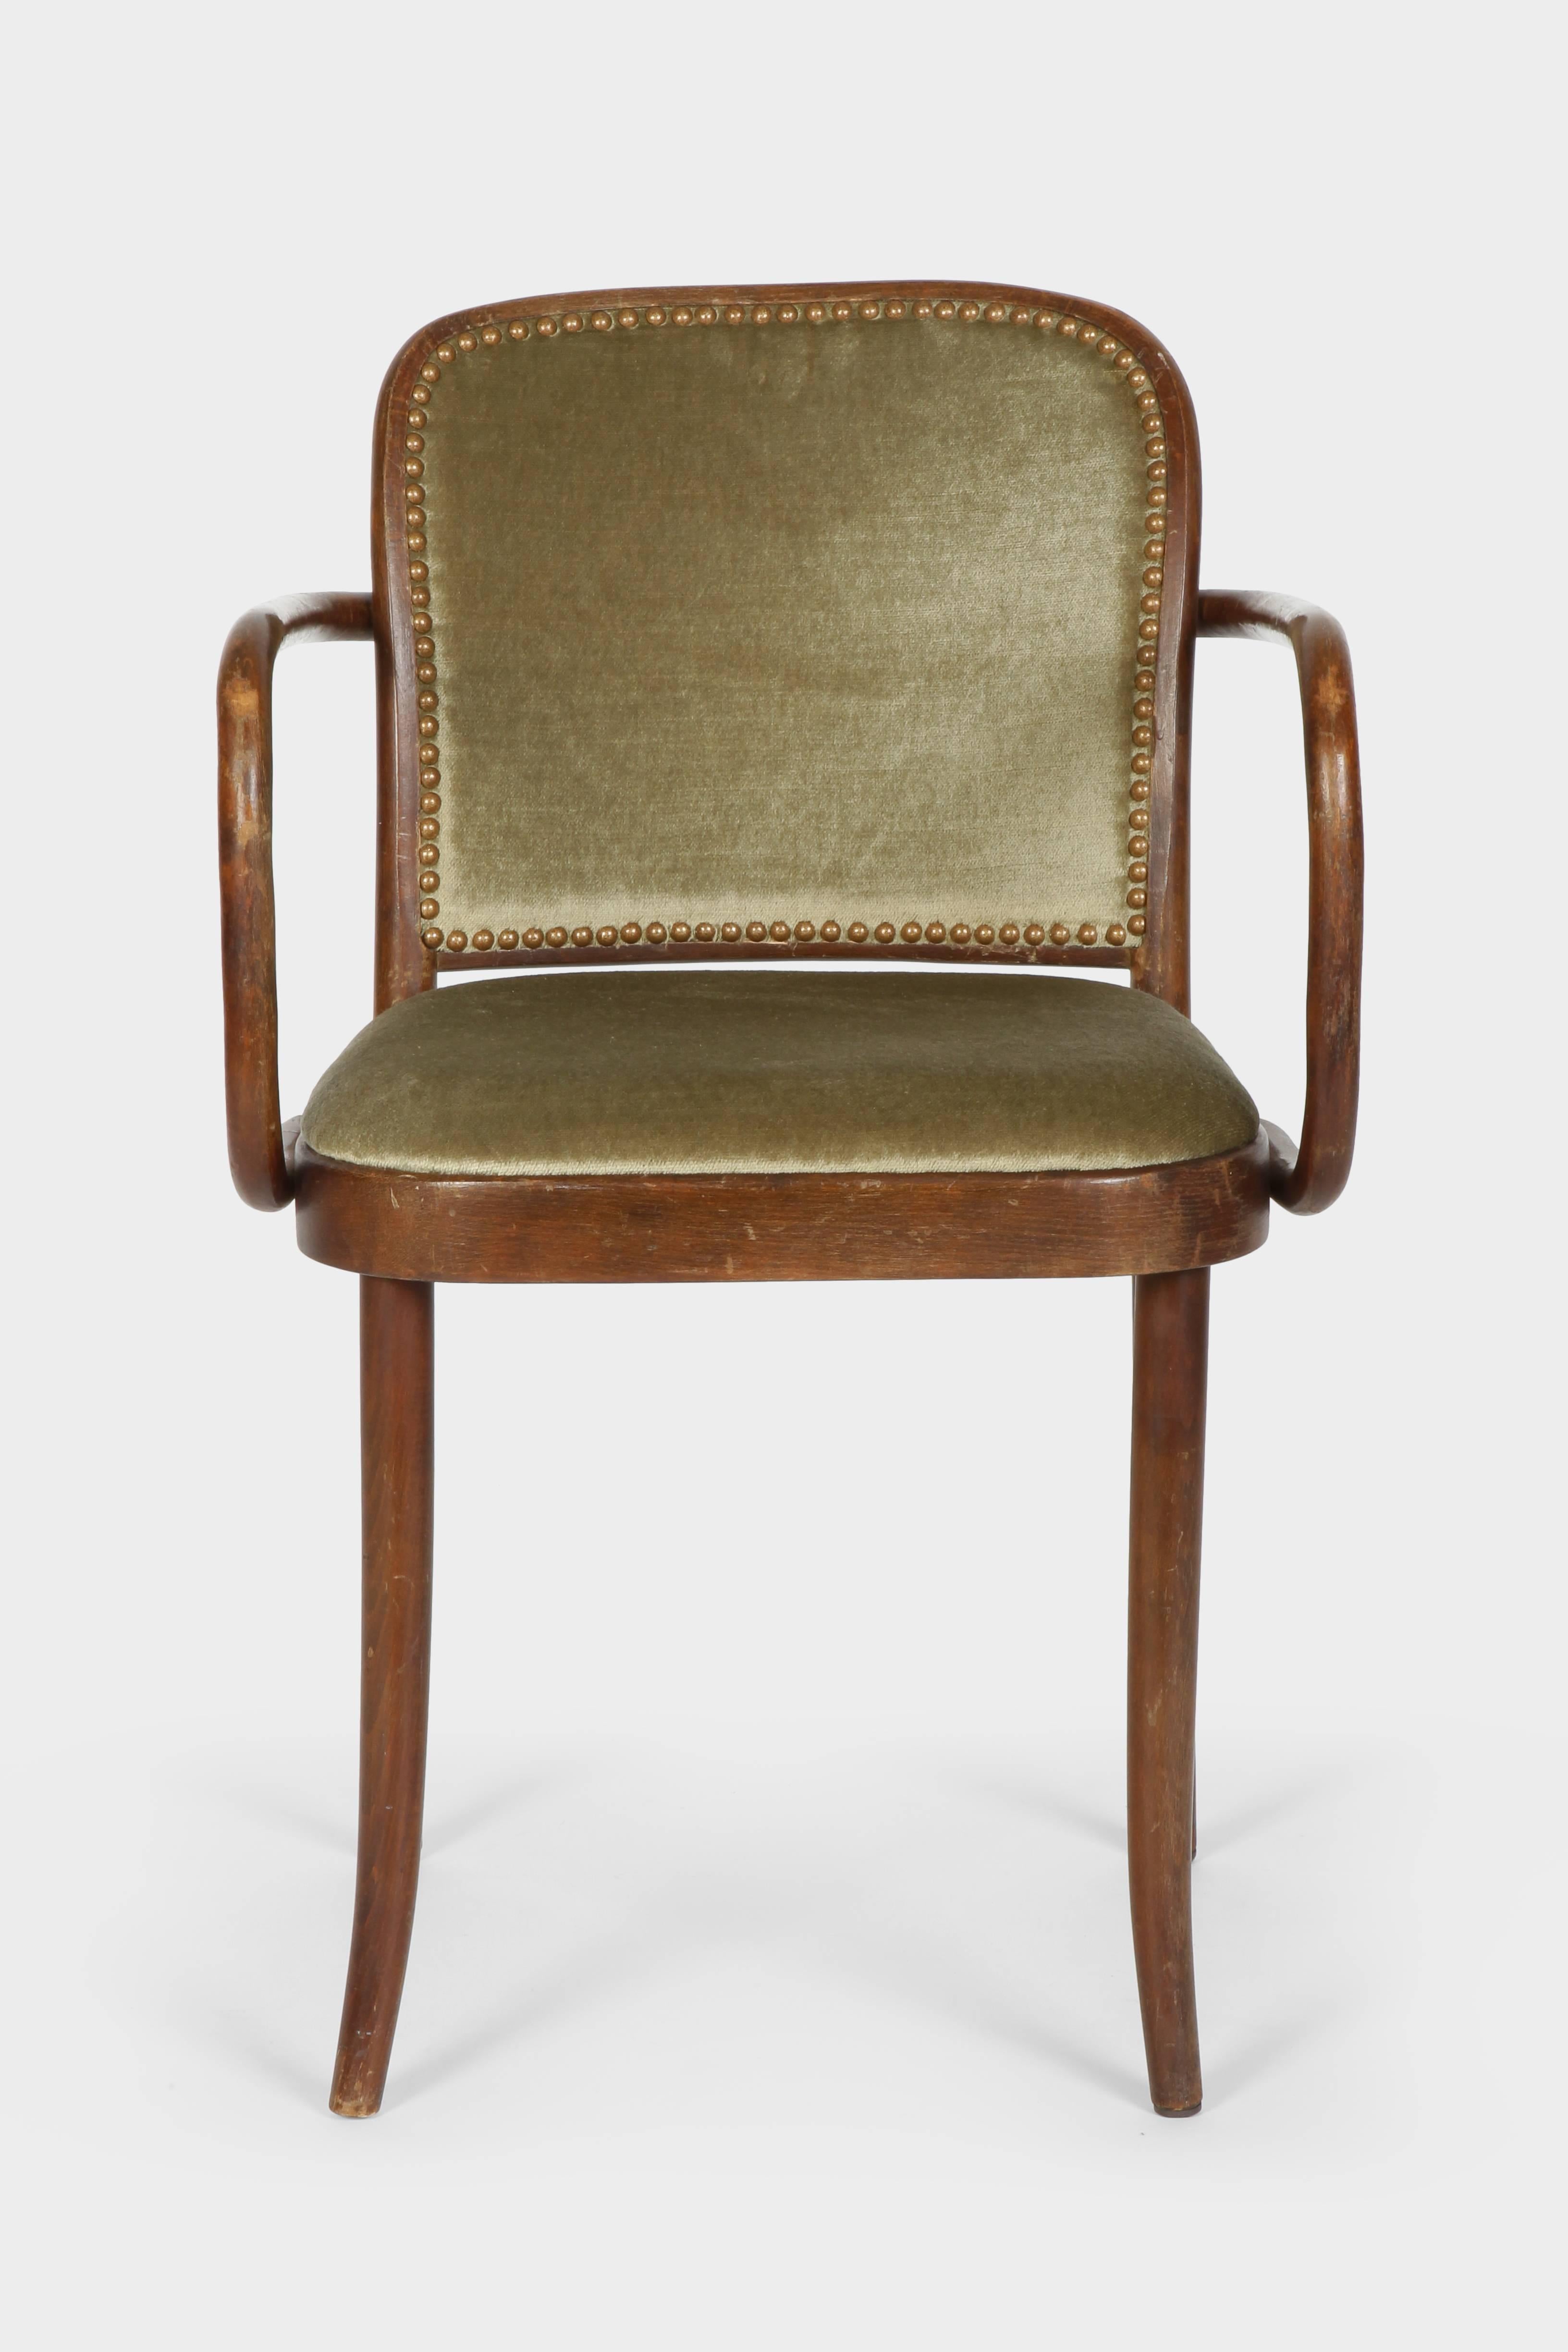 European Josef Hoffmann Chairs Model 811 Thonet, 1960s